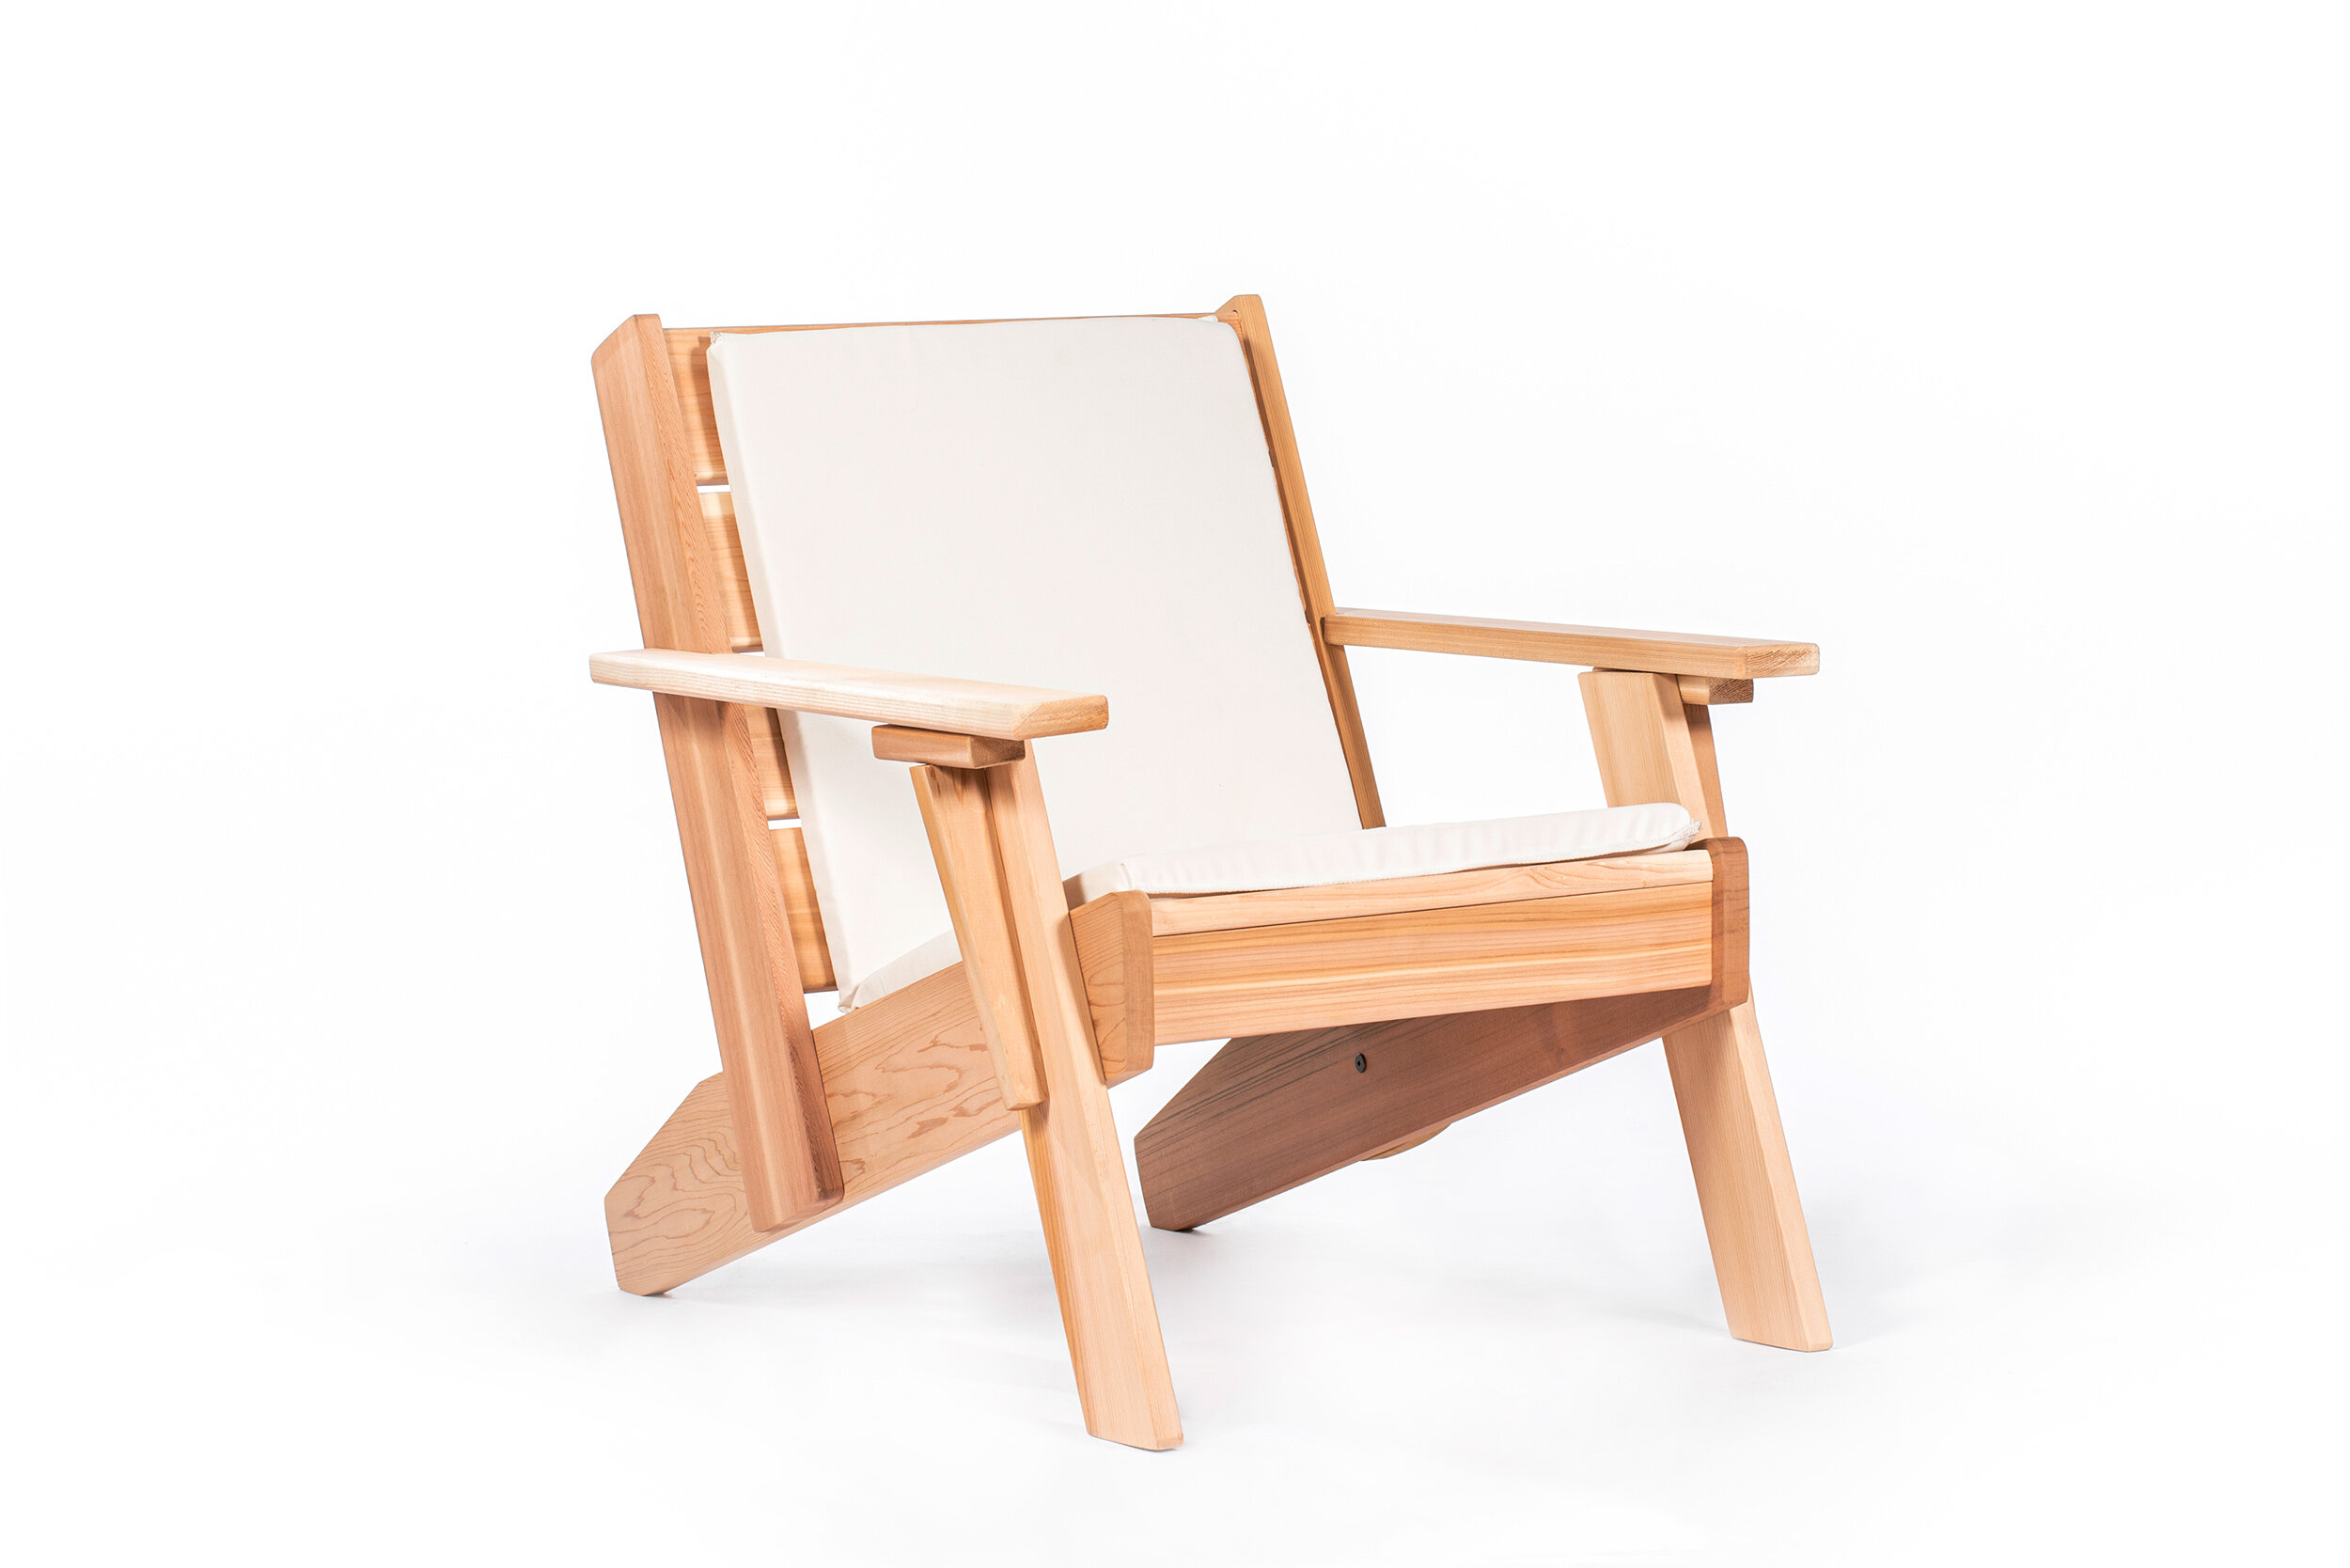 patio-cedar-chair-cushion-furniture-product-photography-photographer-paul-george.jpg